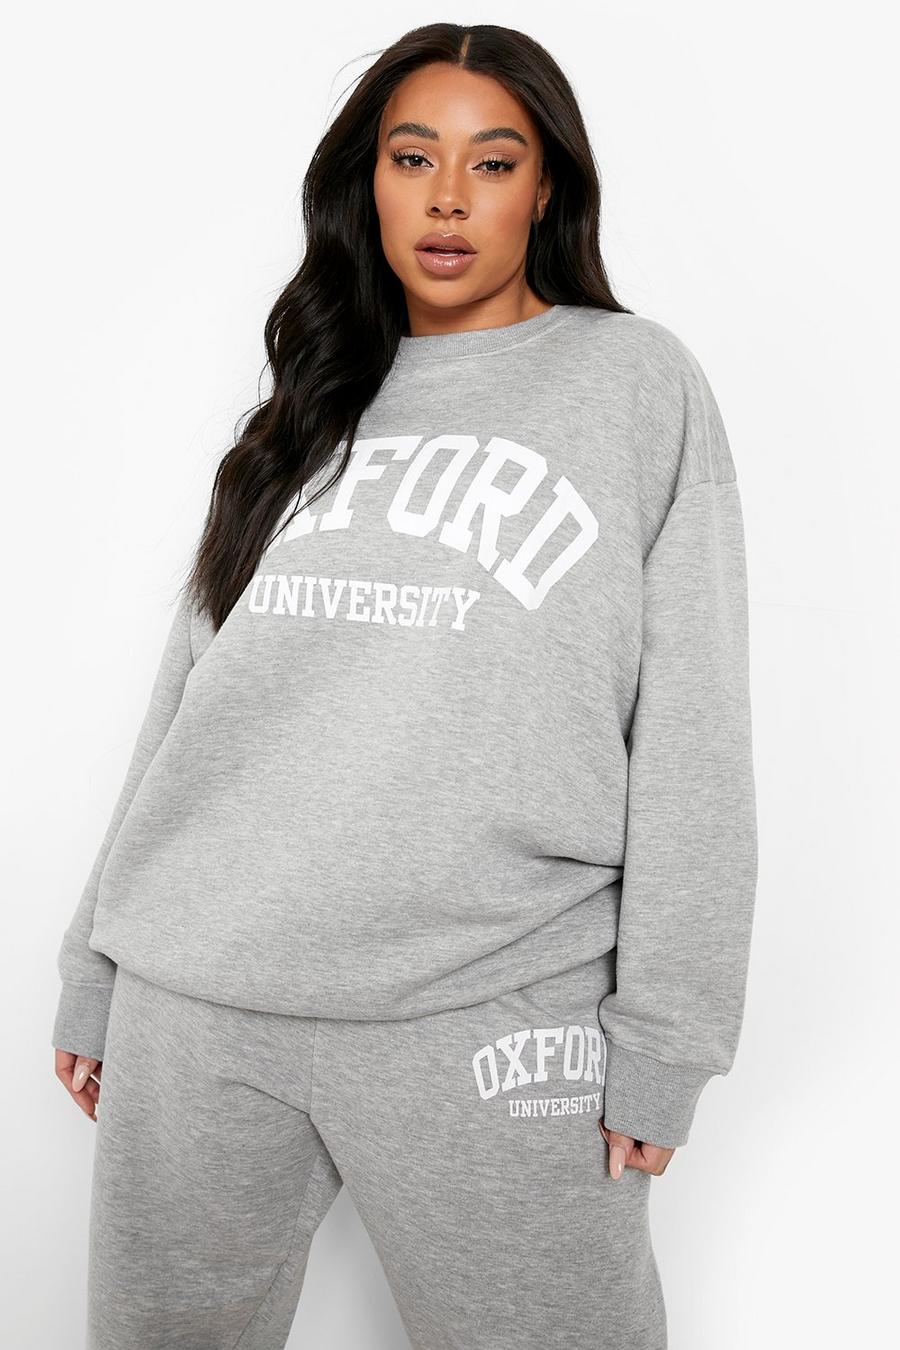 Plus Oversize Oxford University Sweatshirt, Grey image number 1